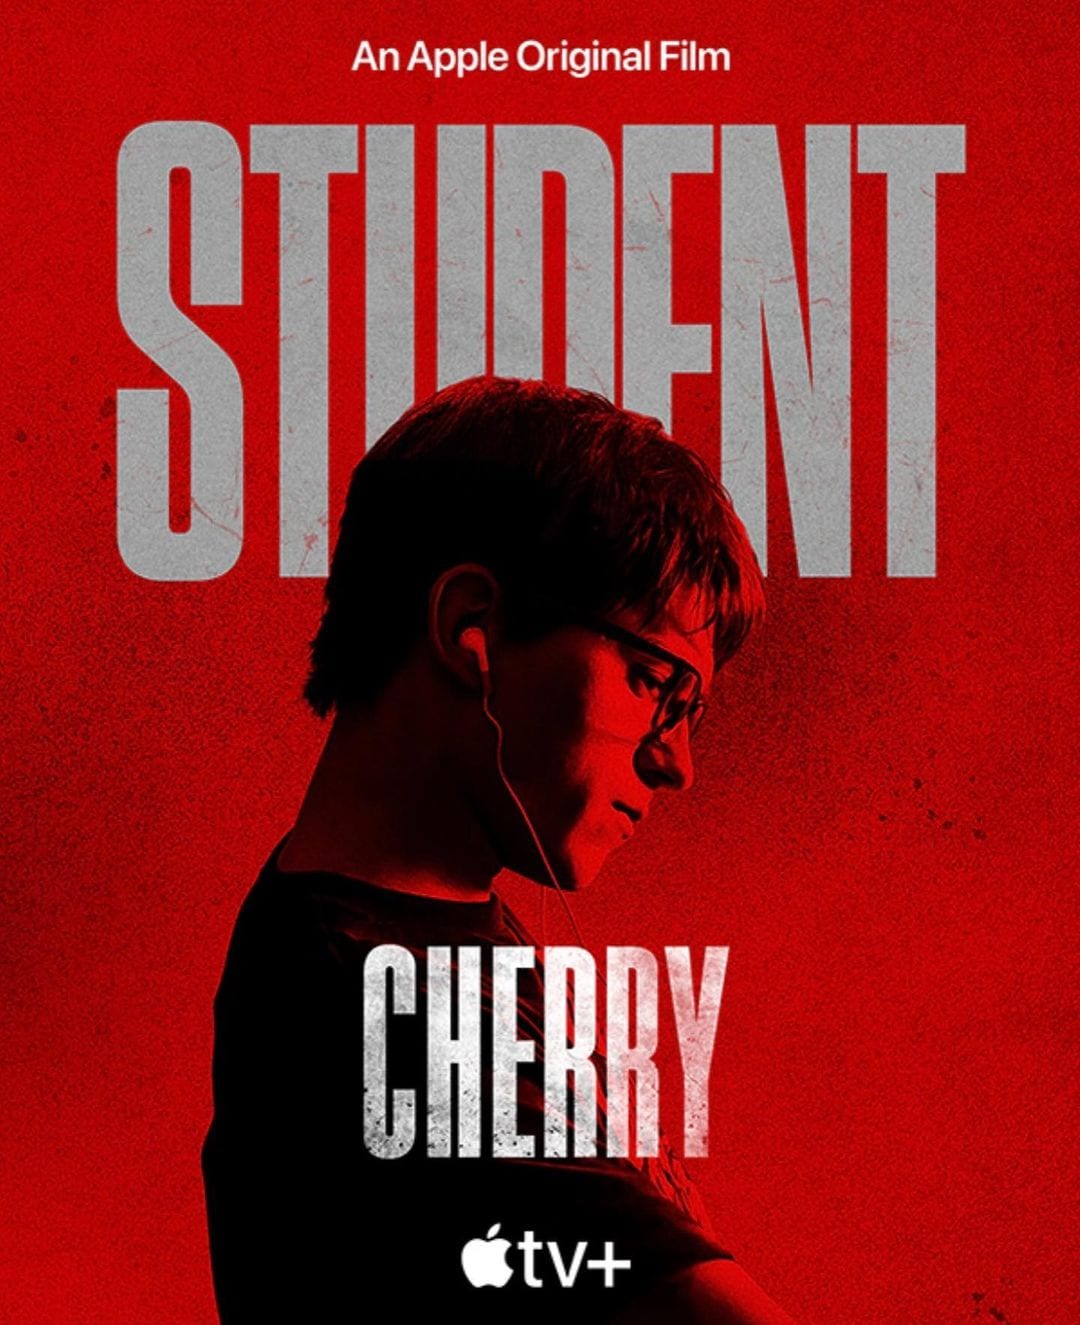 cherry poster 02